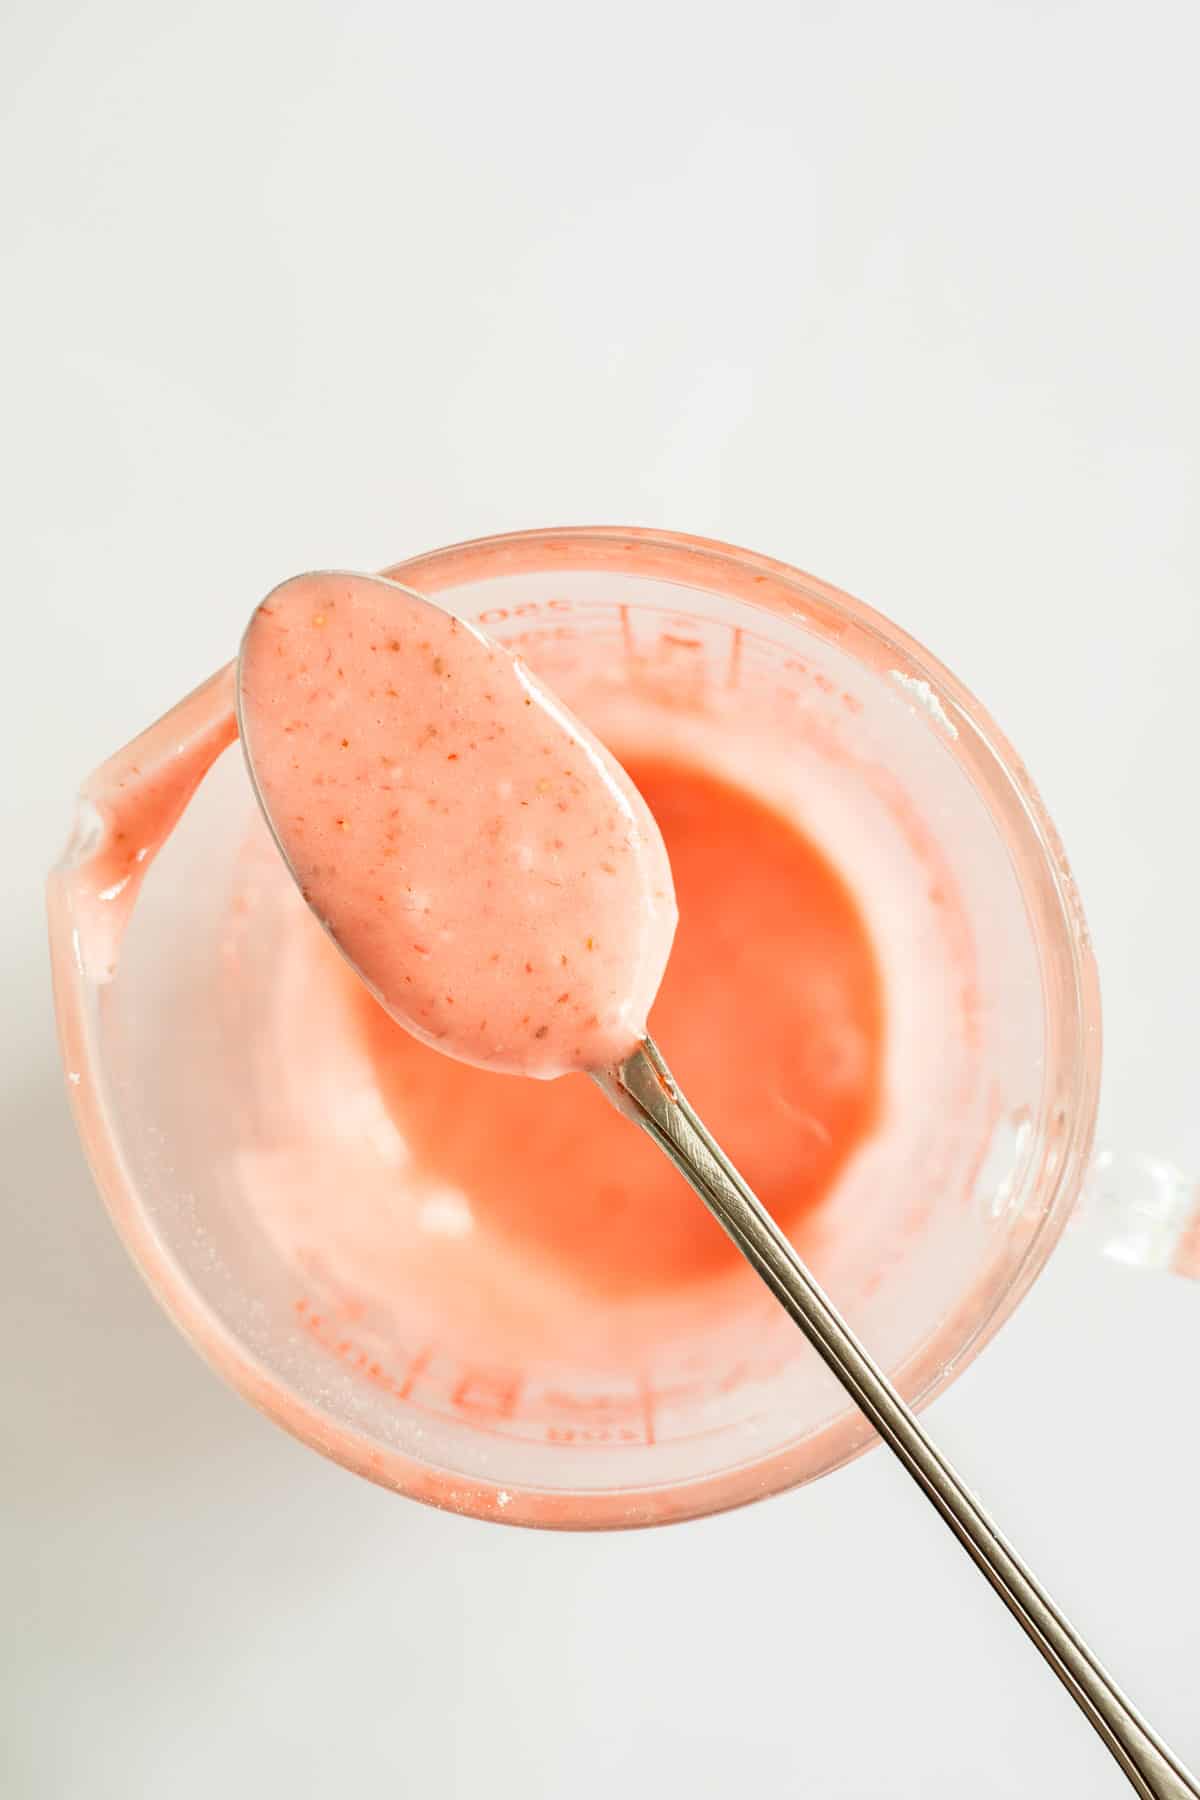 strawberry glaze dripping off a spoon.